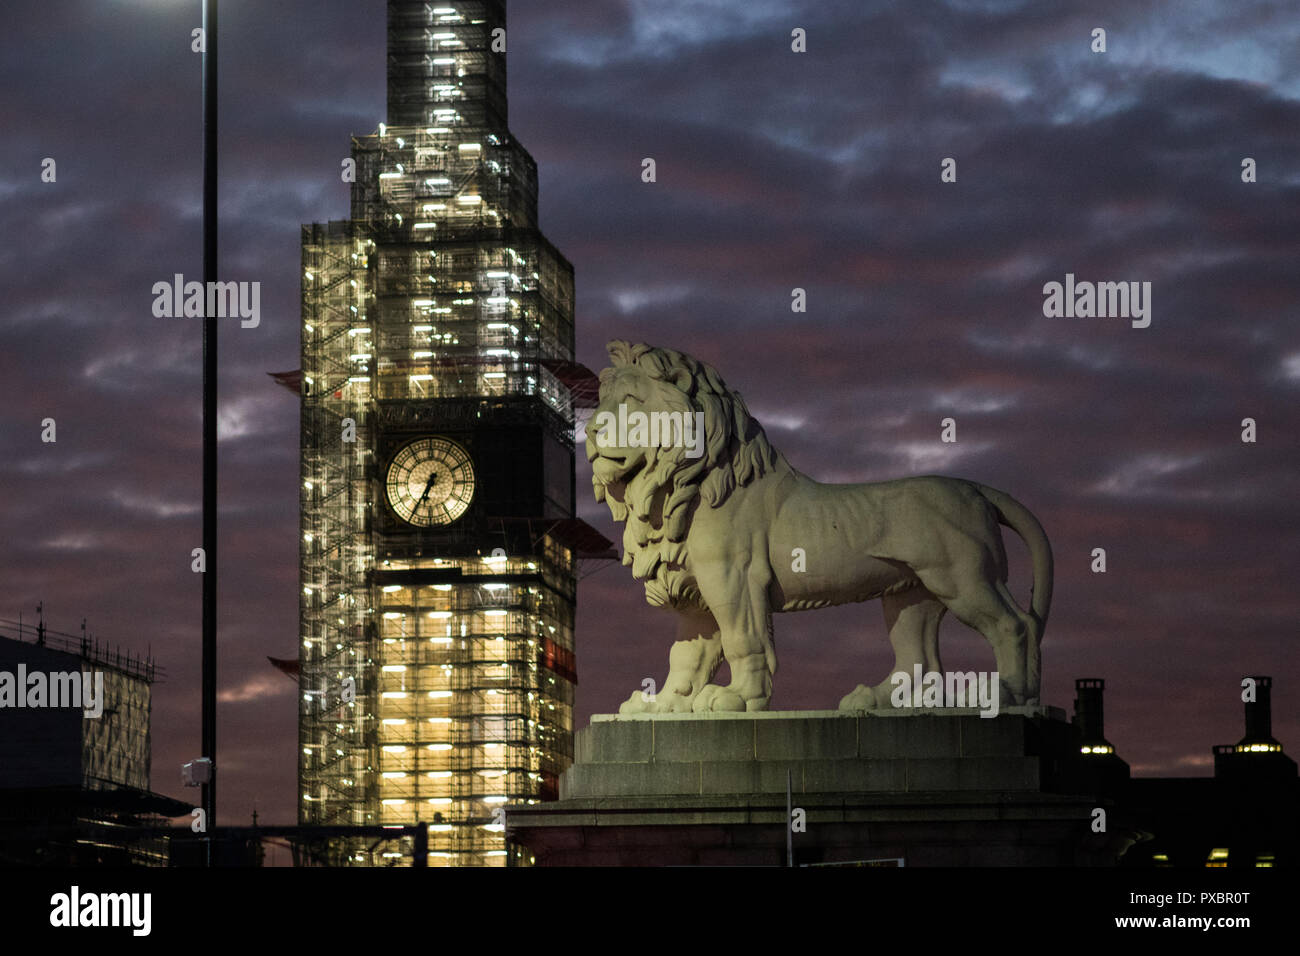 Southbank, London UK. 20. Oktober 2018. UK Wetter, schöne Himmel über London während des Sonnenuntergangs. Big Ben. Quelle: Carol moir/Alamy leben Nachrichten Stockfoto